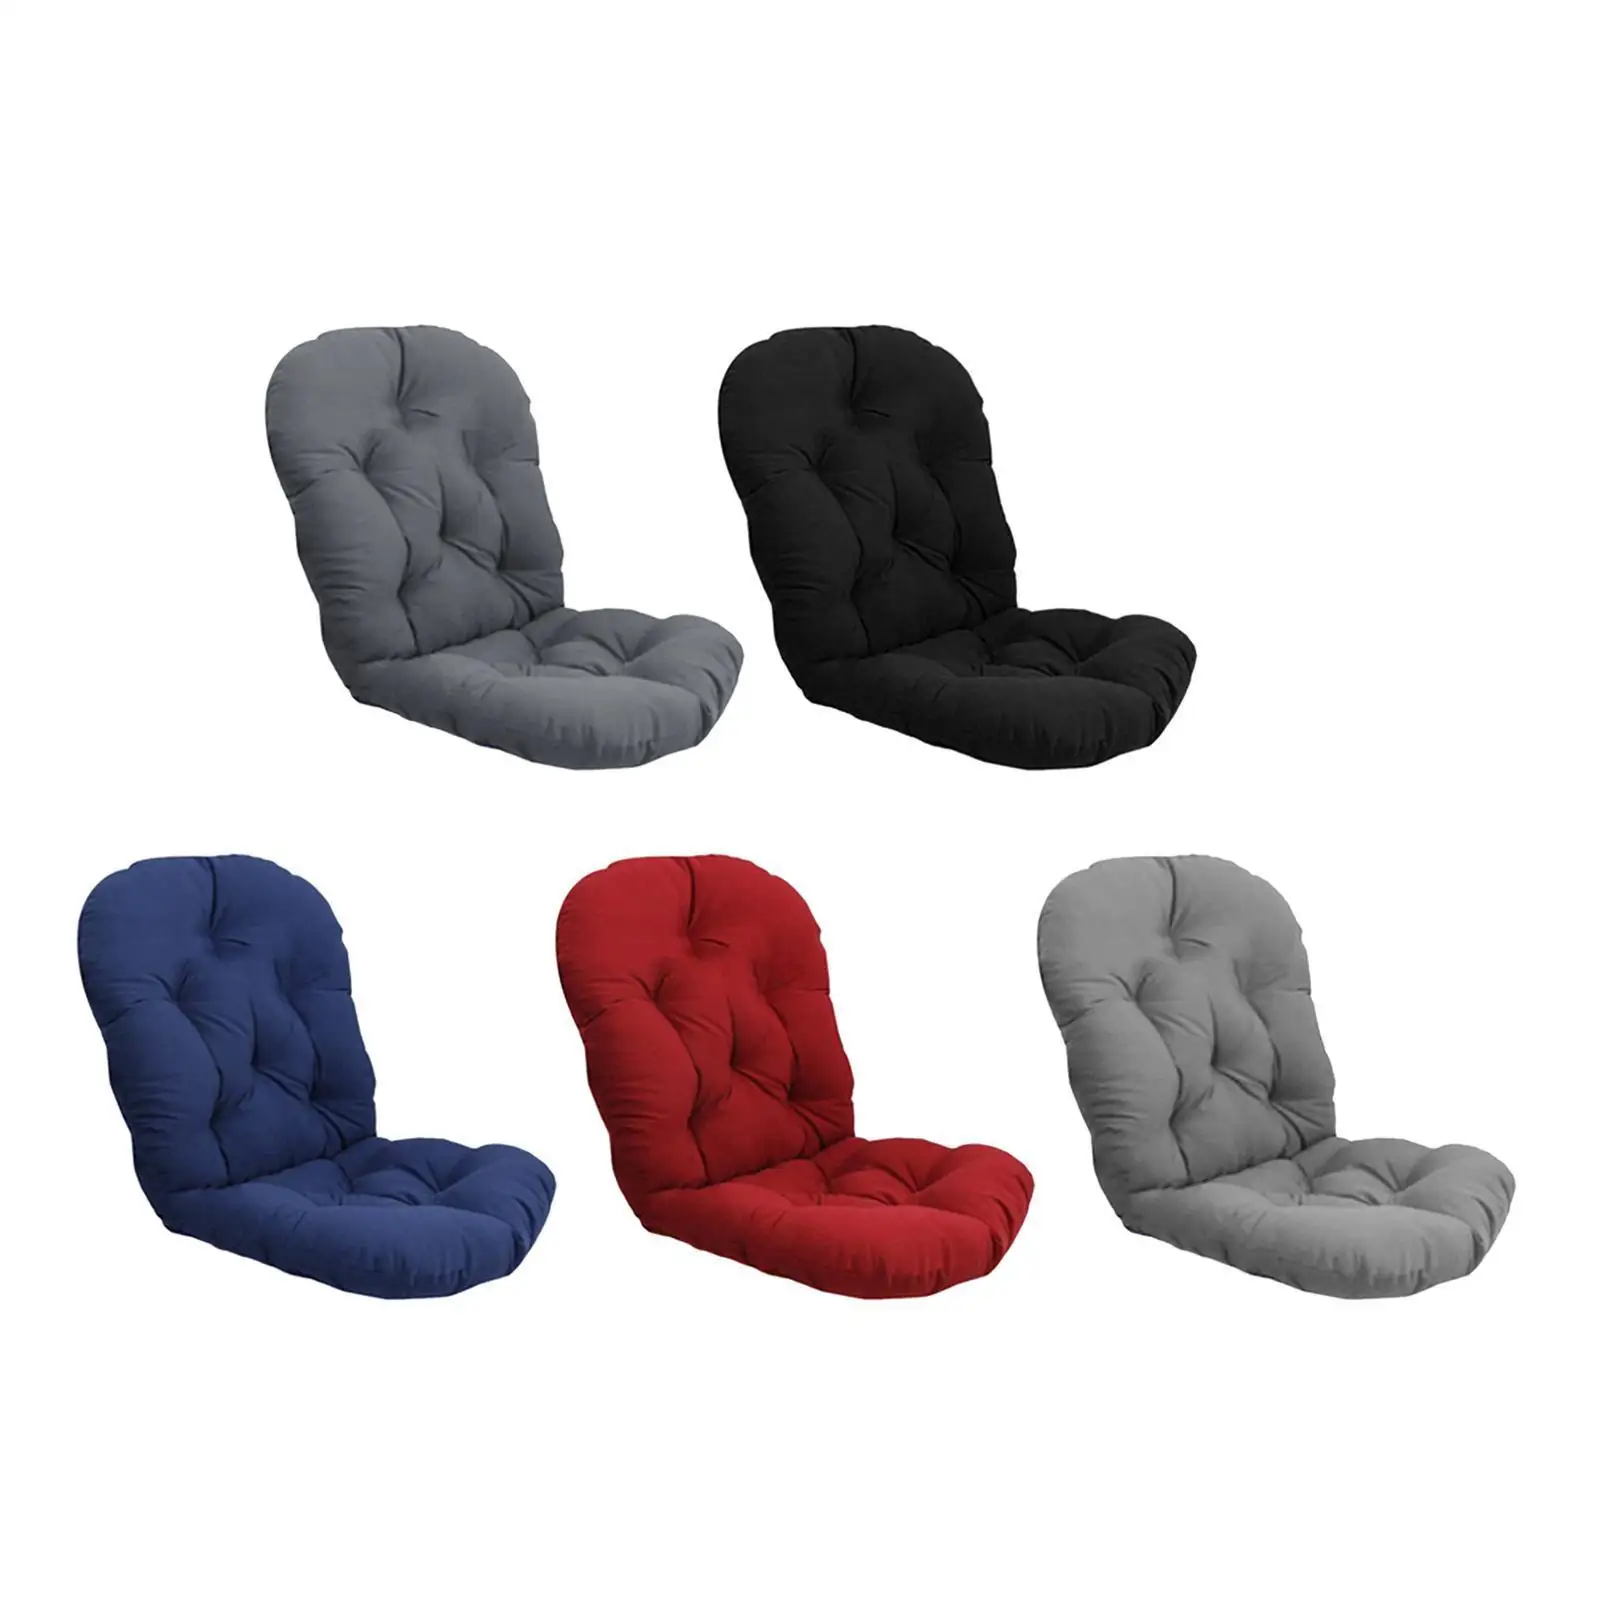 Textured Rattan Wicker Swivel Rocker Chair Cushion Seat Cushions